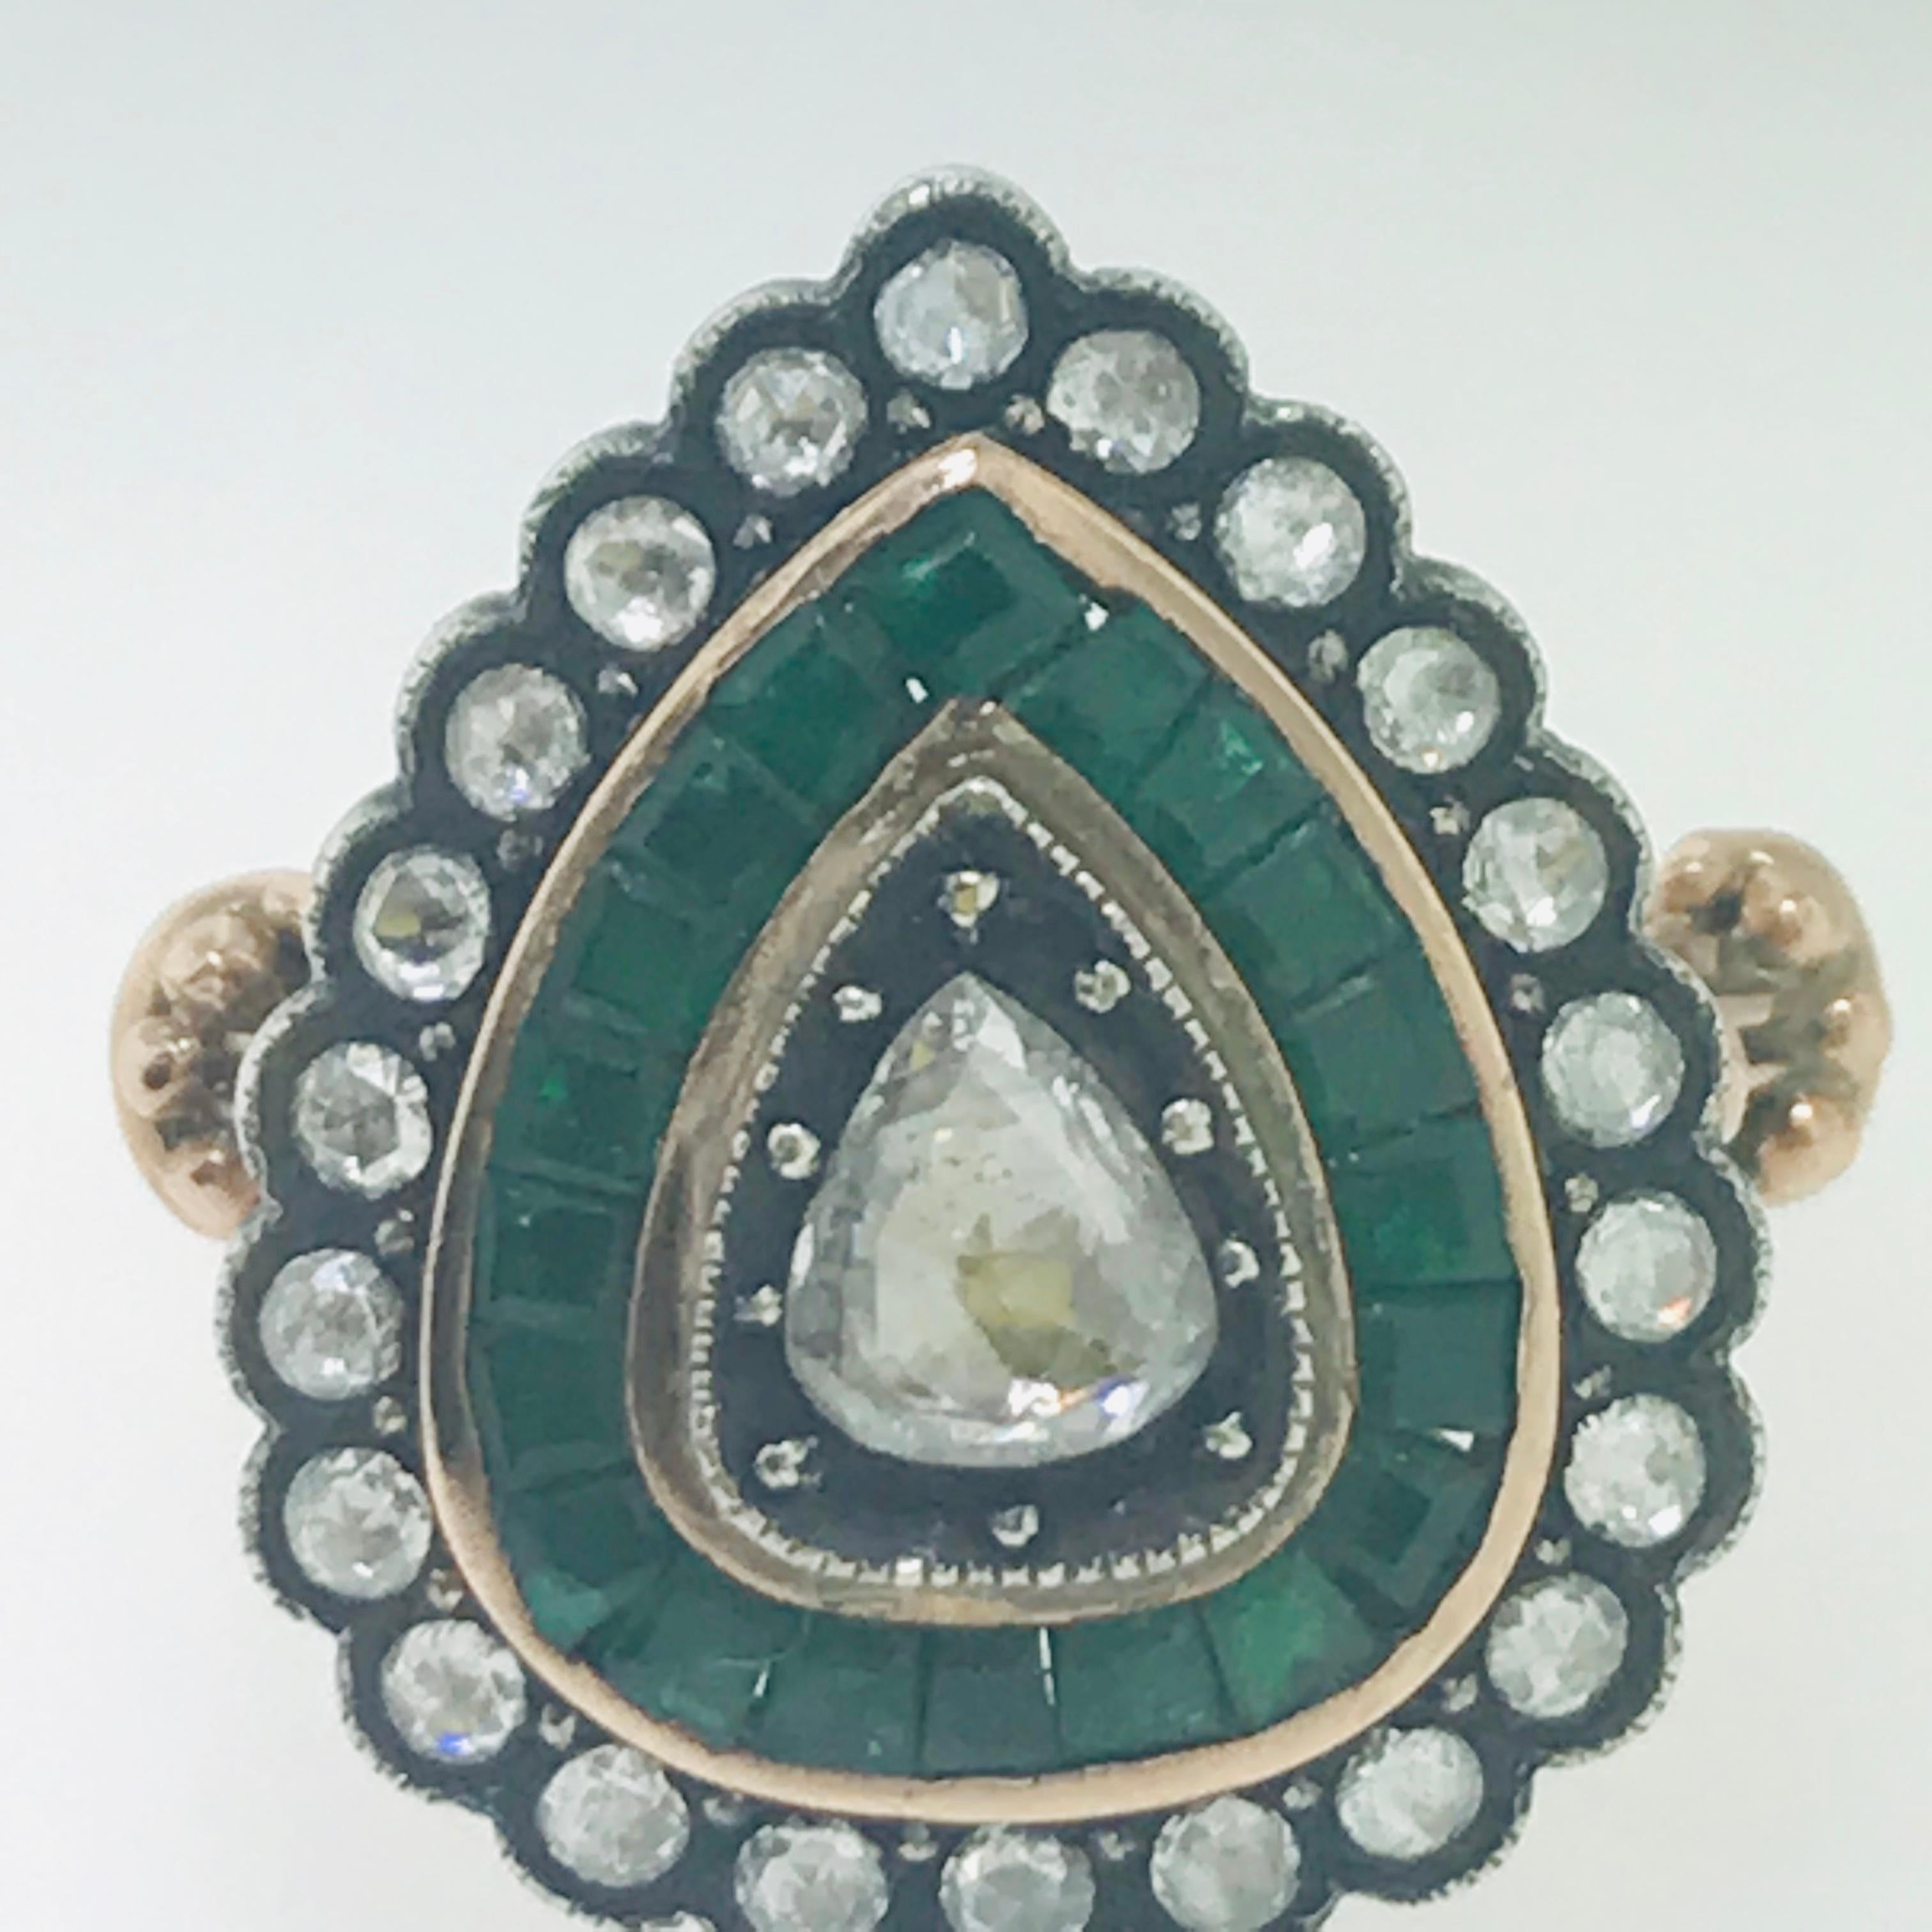 Women's 1 Carat Diamond and 1 Carat Emerald Estate Pear Shaped Ring, circa 18th Century